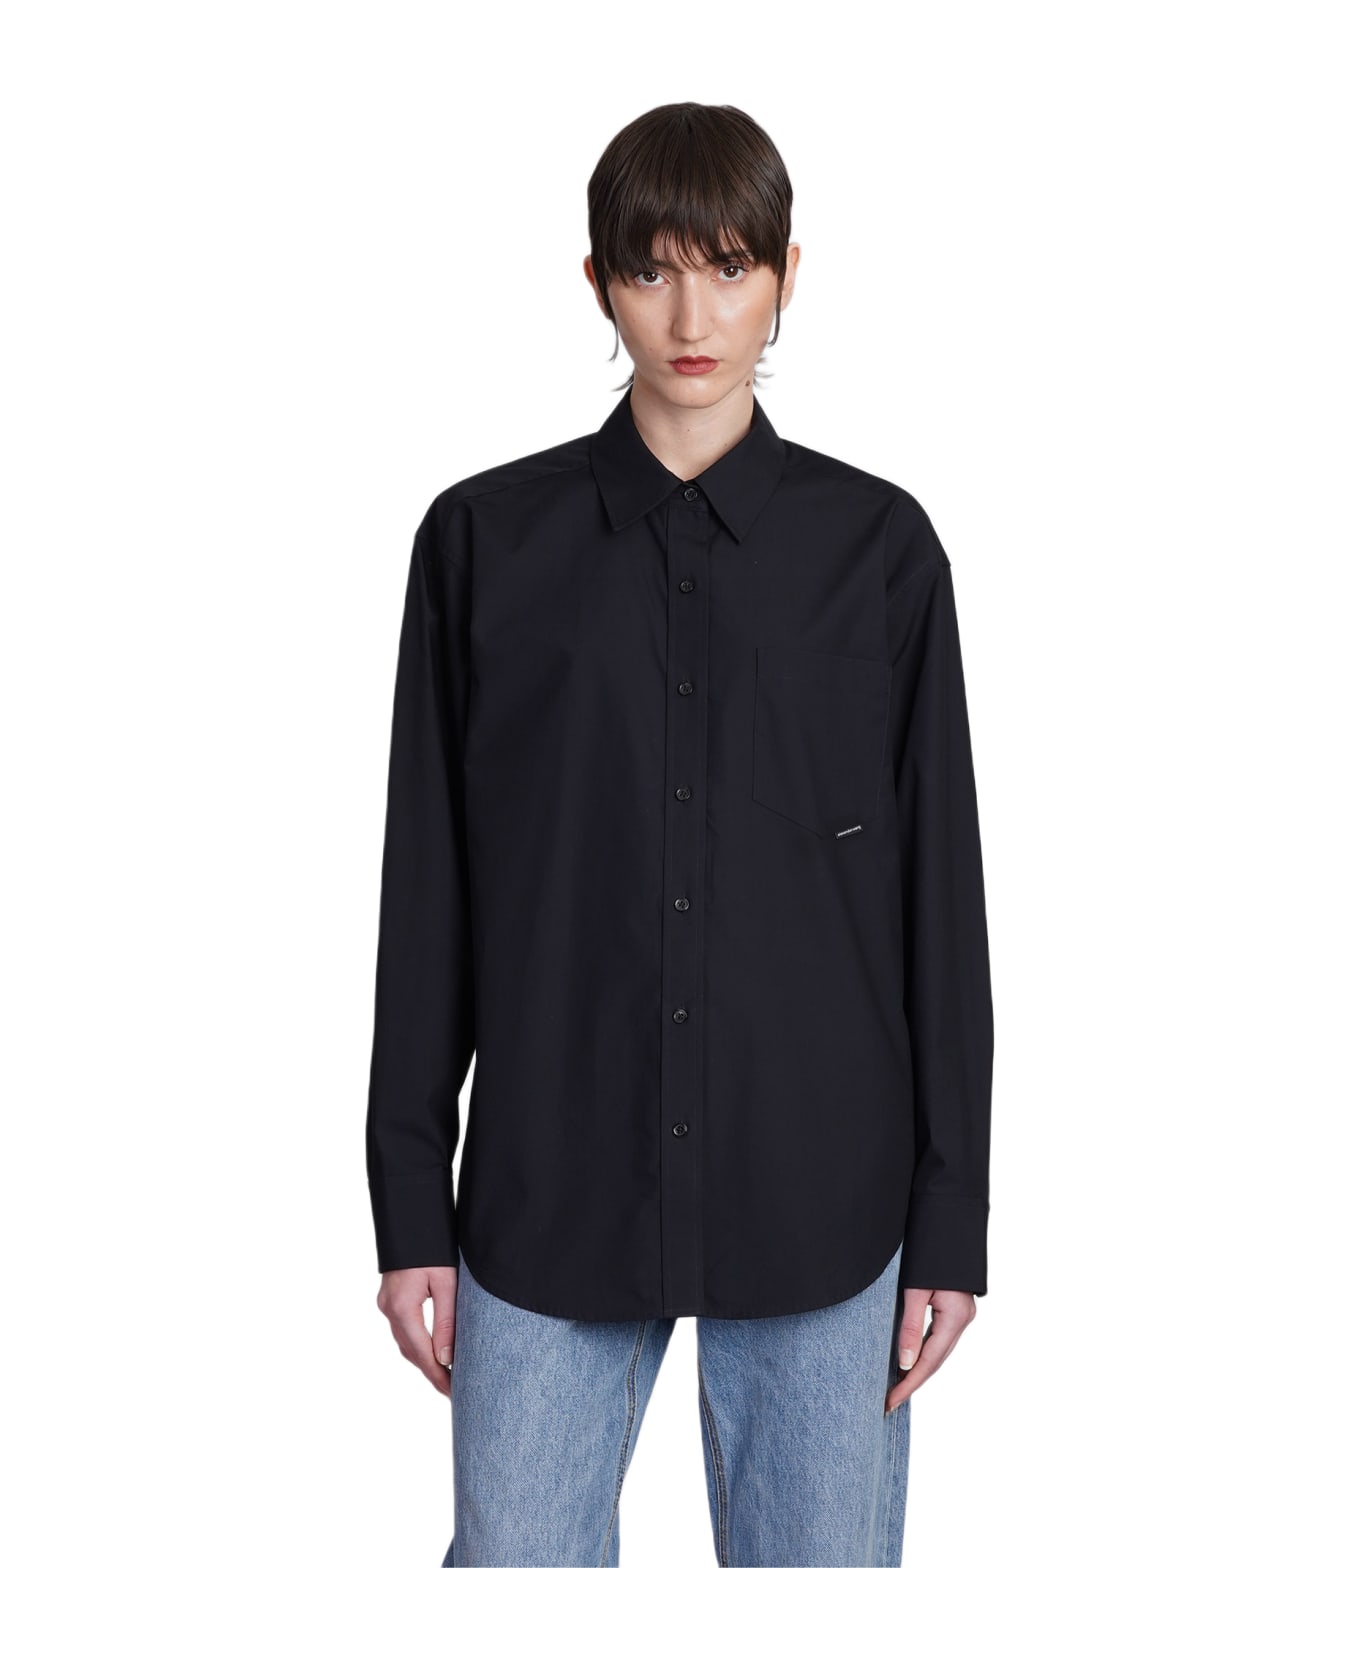 Alexander Wang Shirt In Black Cotton - black